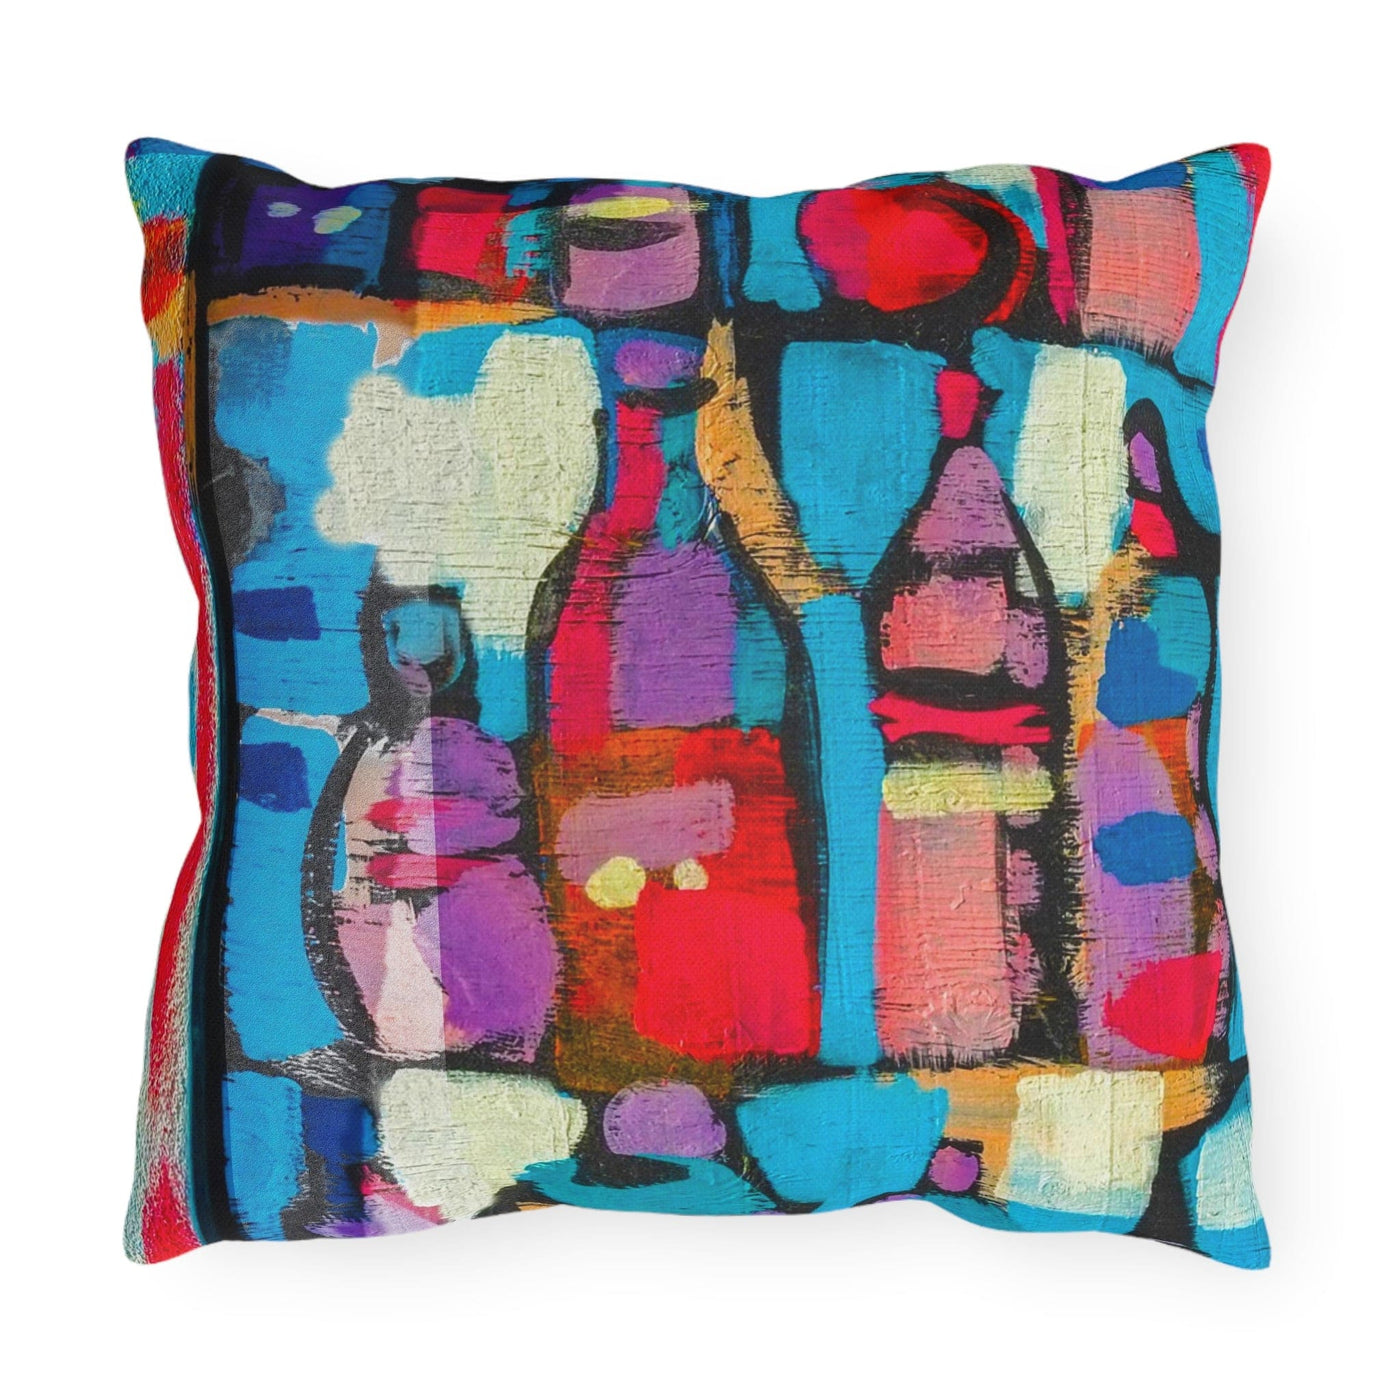 Decorative Outdoor Pillows With Zipper - Set Of 2 Sutileza Smooth Colorful